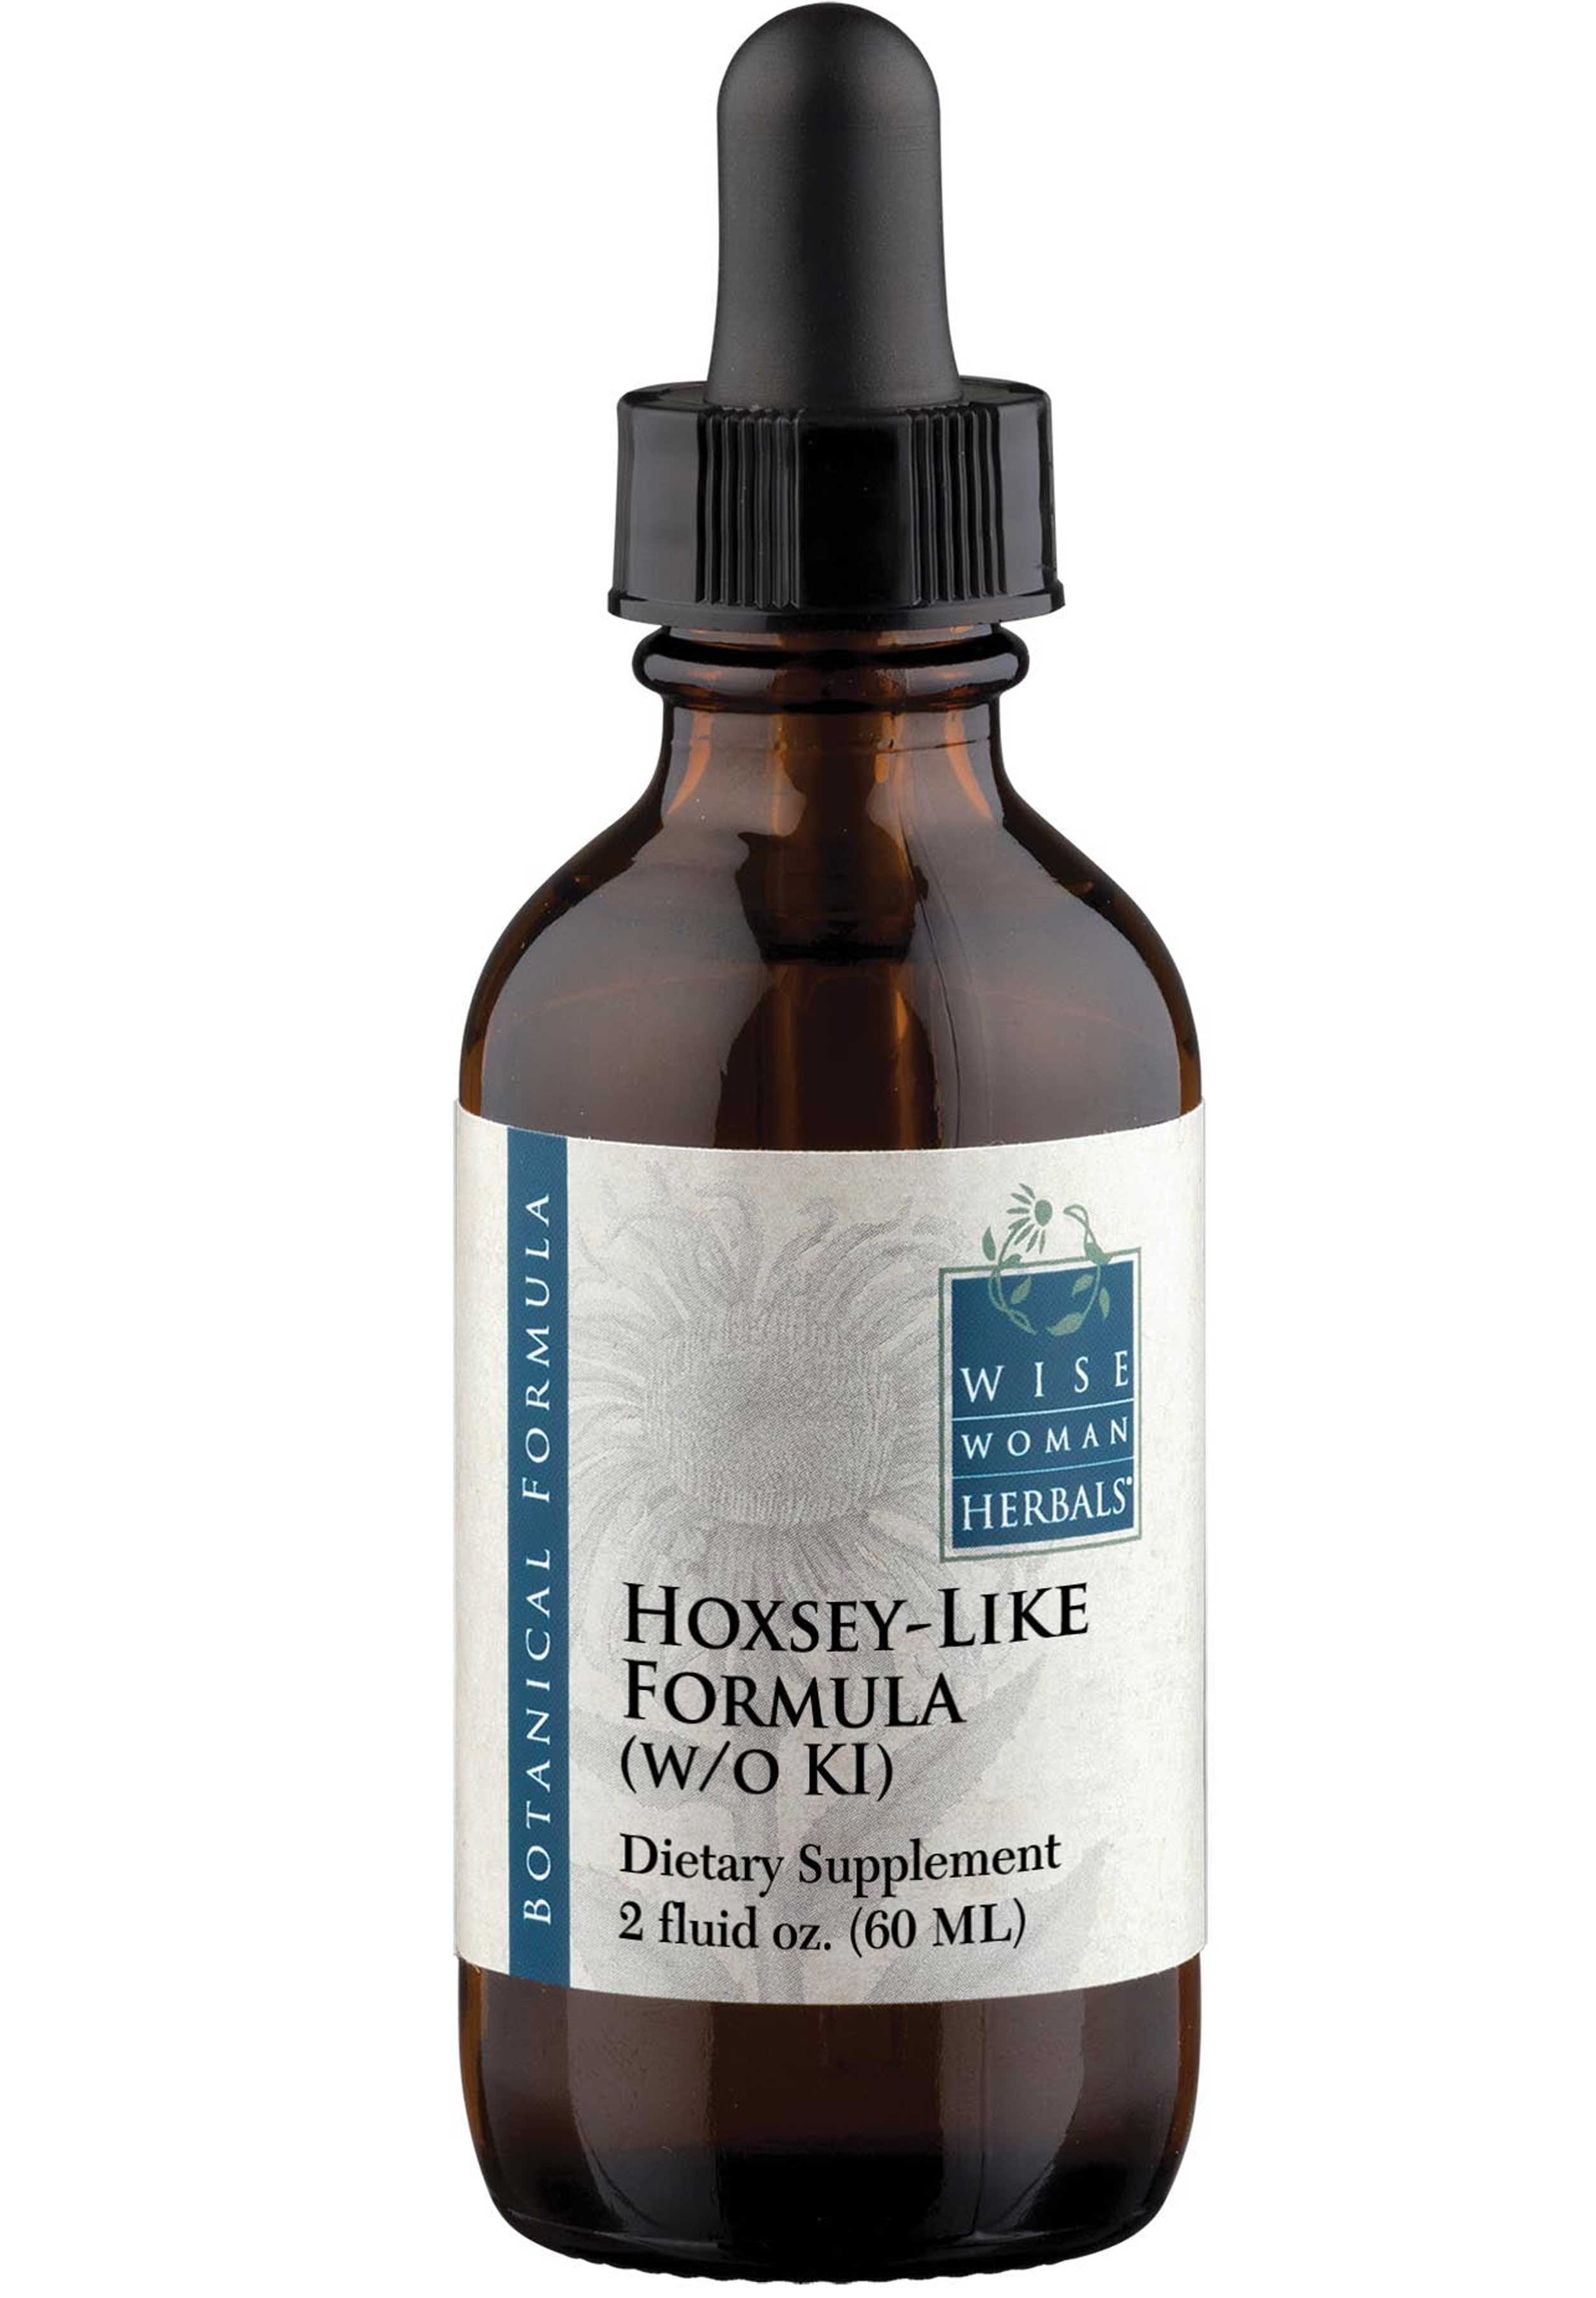 Wise Woman Herbals Hoxsey Like Formula without Potassium Iodide (w/o KI)